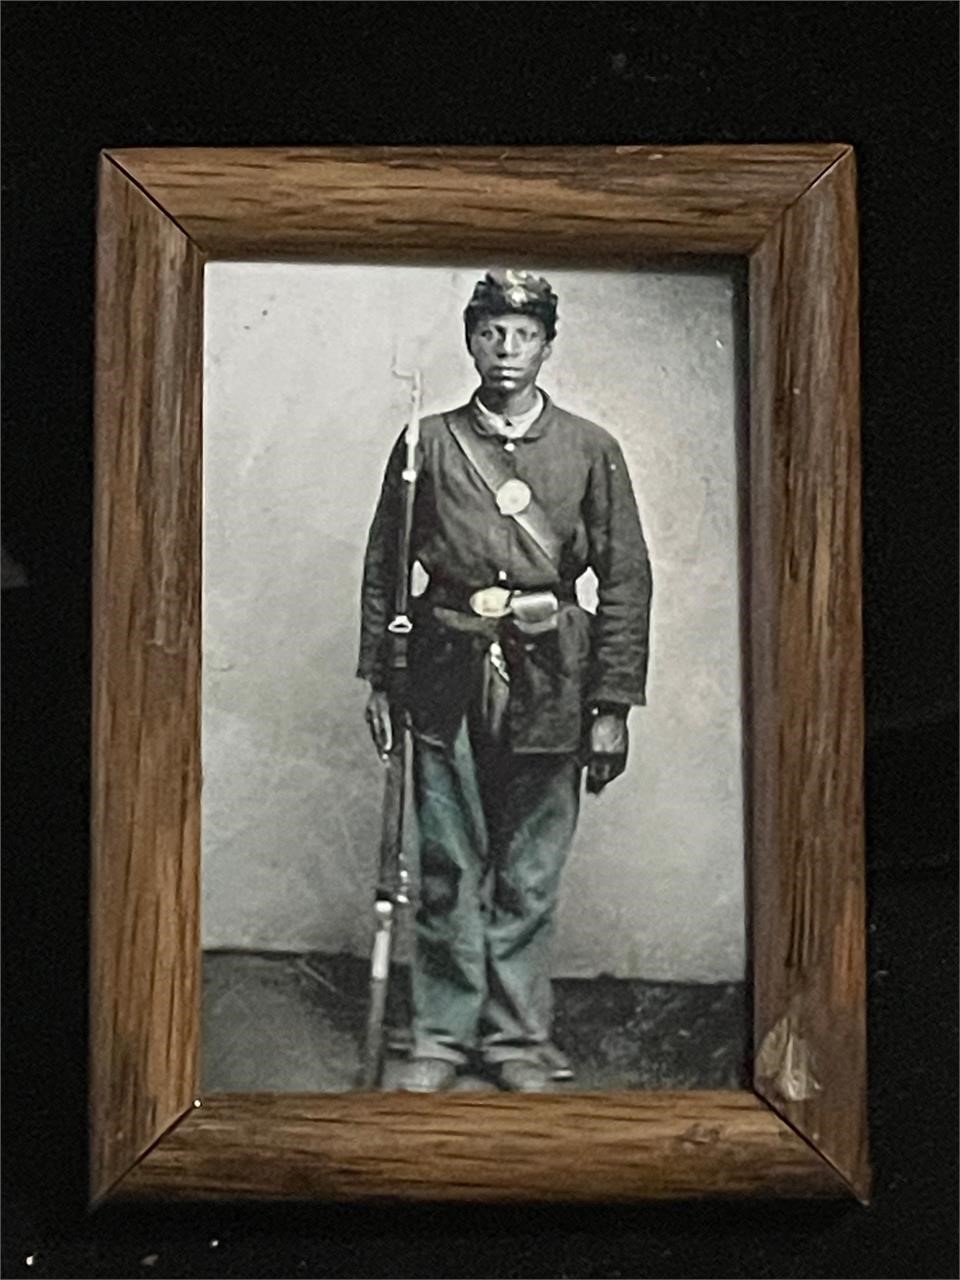 Very cool civil war Soldier Photo